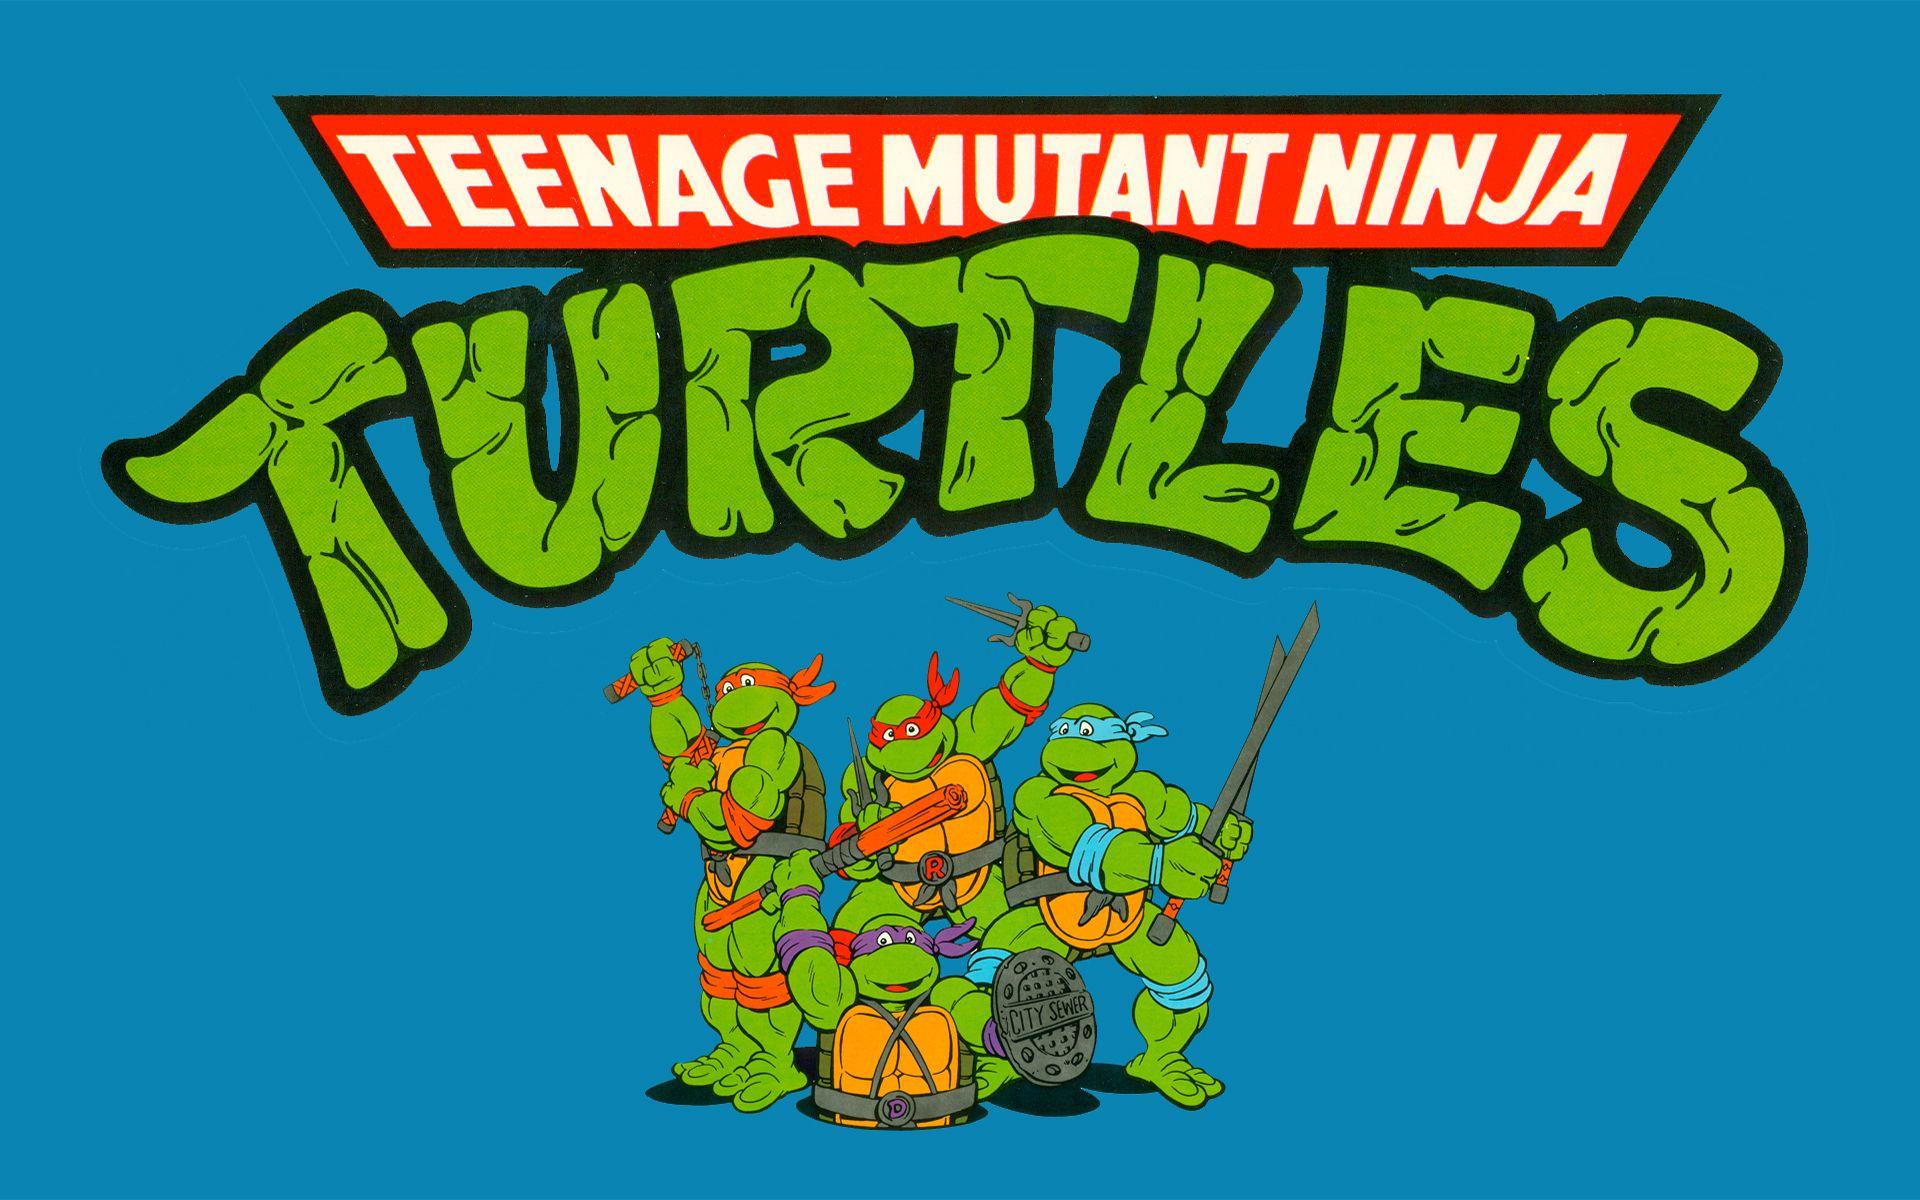 Classic Ninja Turtles Wallpapers Top Free Classic Ninja Turtles Backgrounds Wallpaperaccess 7186